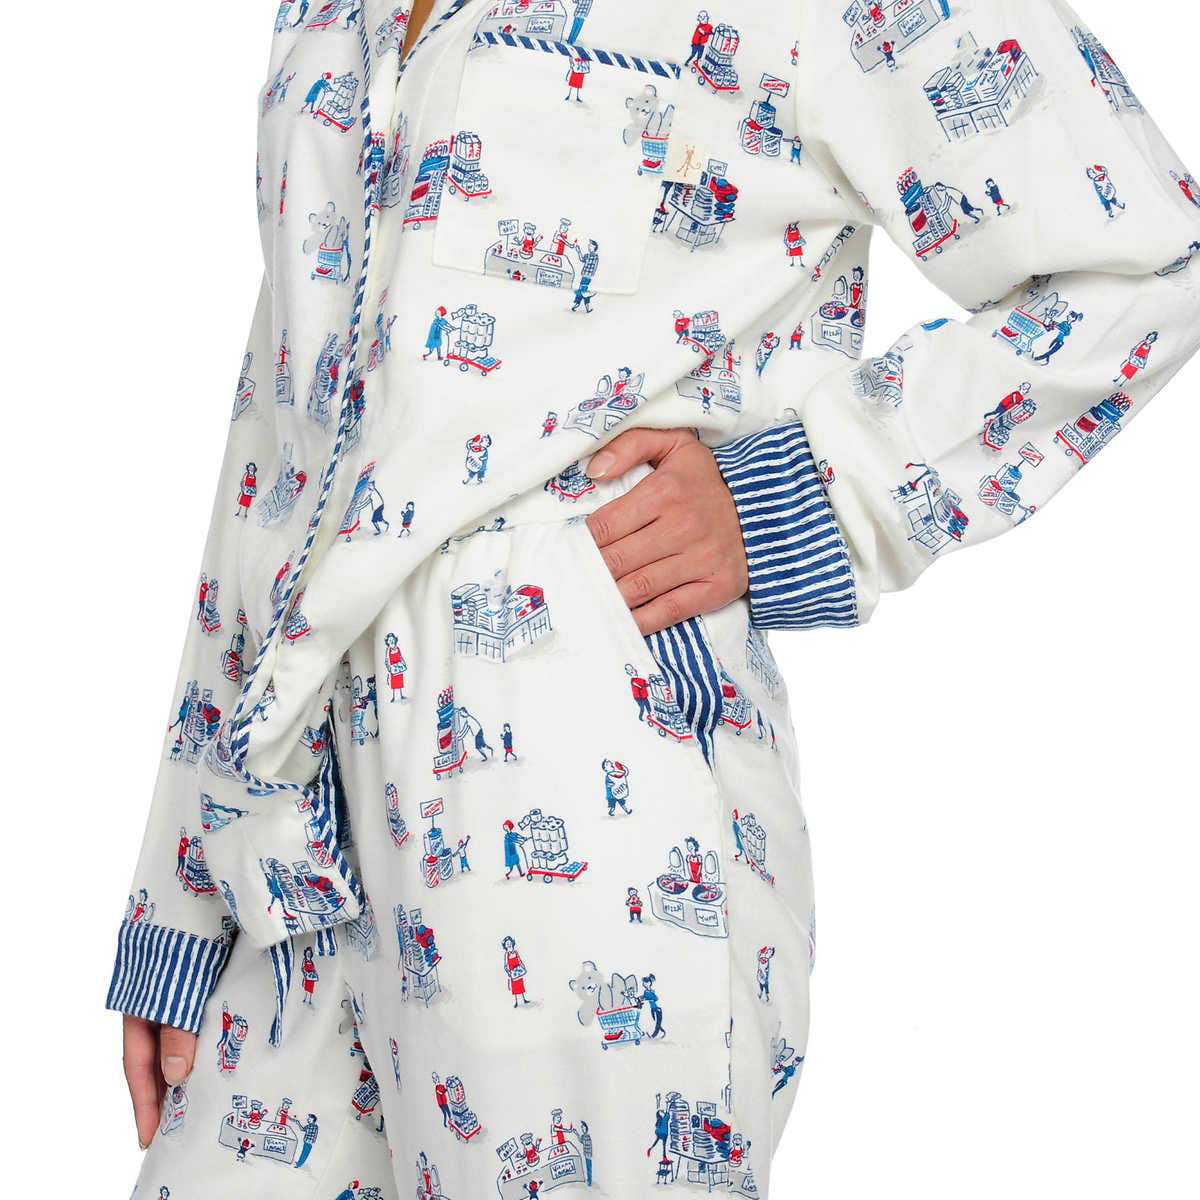 Munki Munki Women's Pajamas COSTCO Theme Print Large